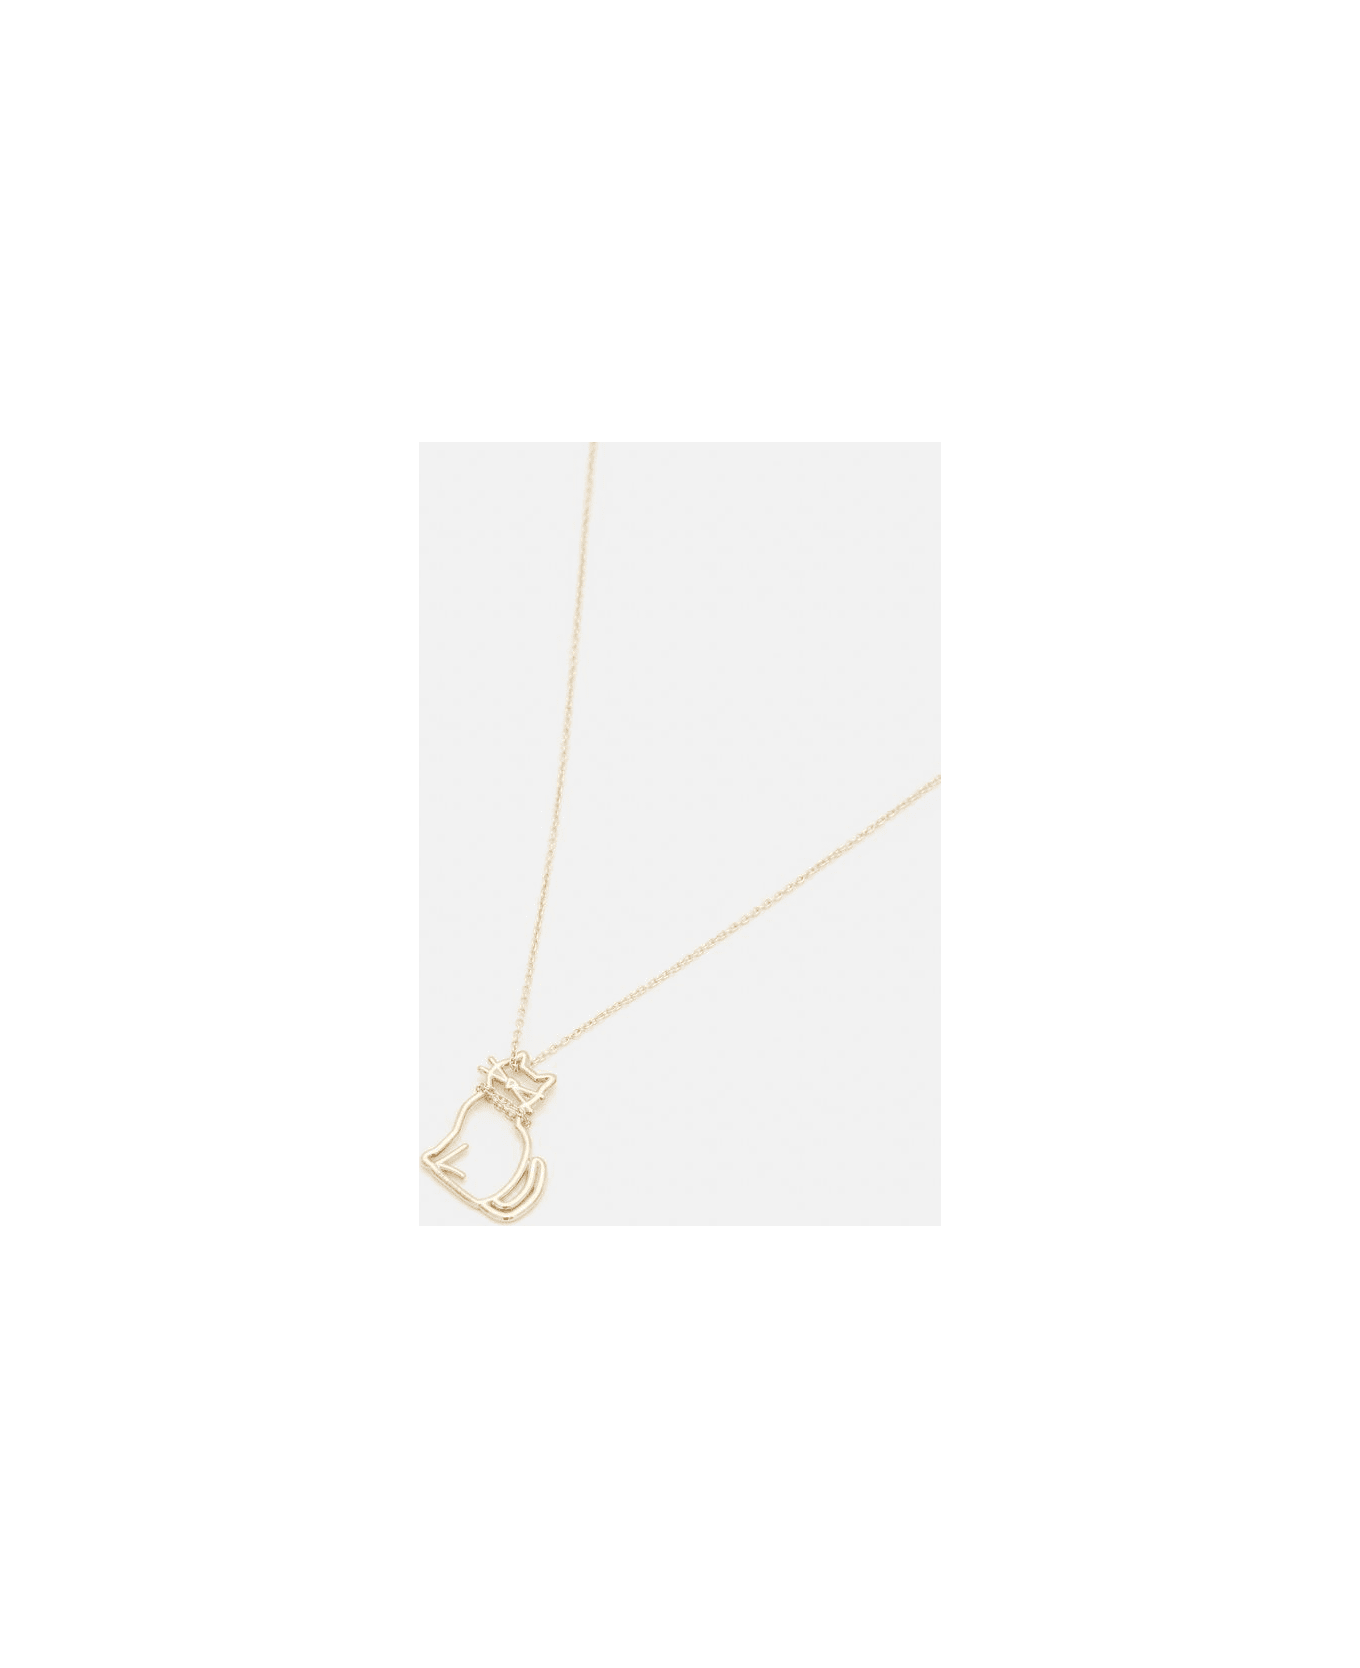 Aliita 'miau' Gold Pendant Necklace - Gold